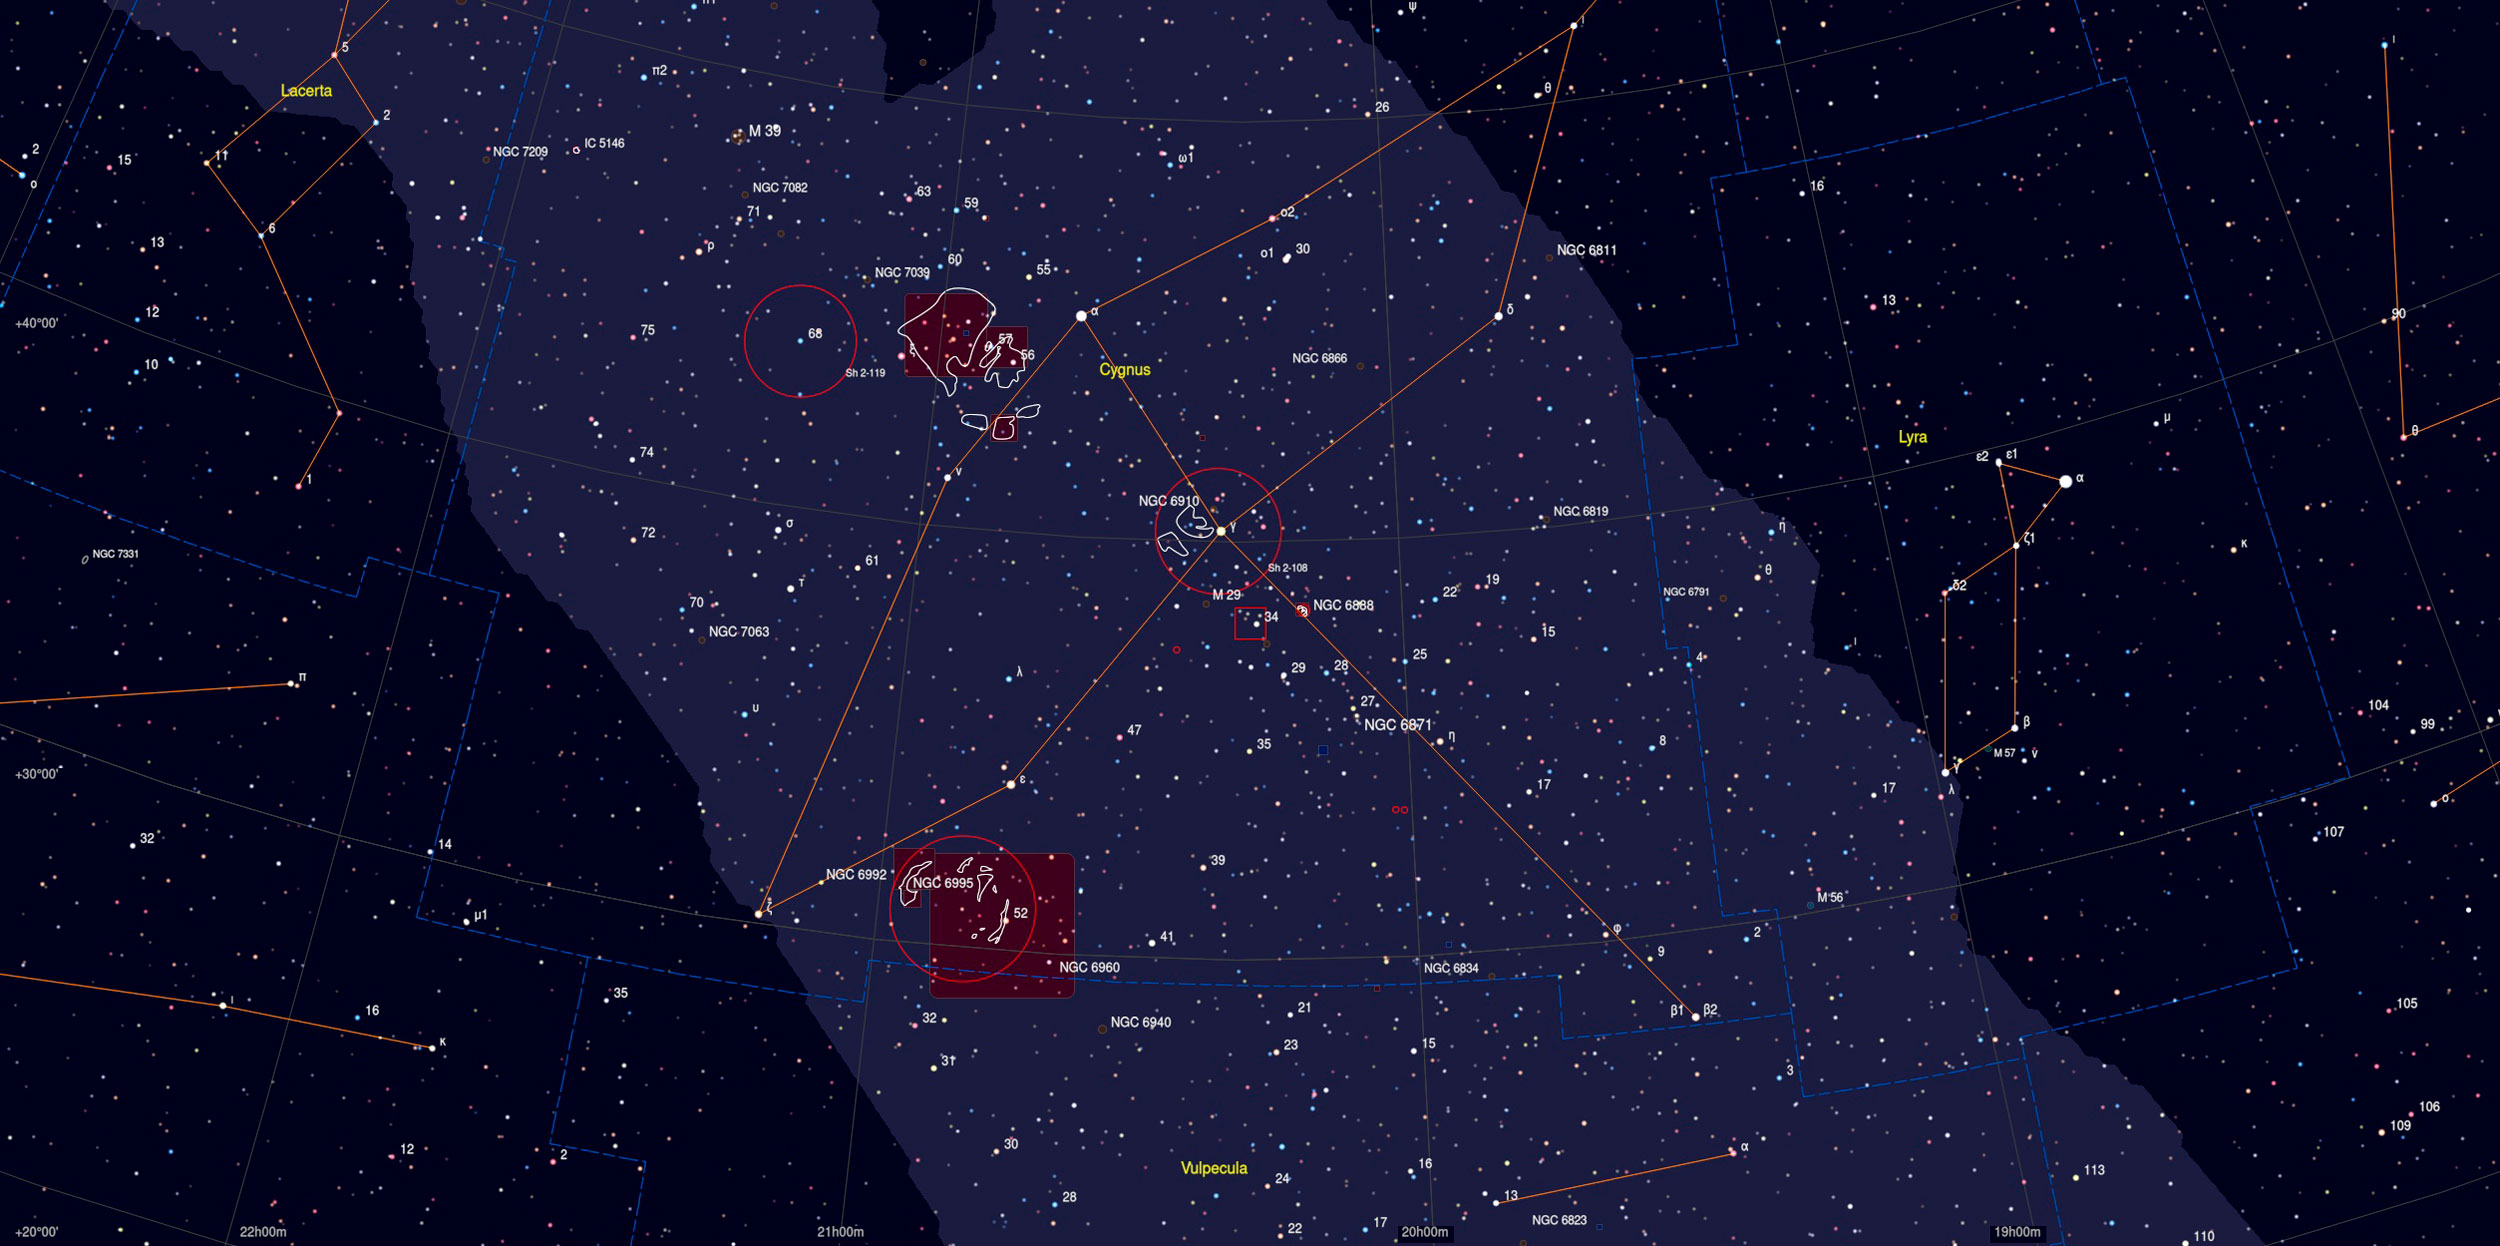 LBN 380 Region Sky Chart - Astrophotography Martin Rusterholz